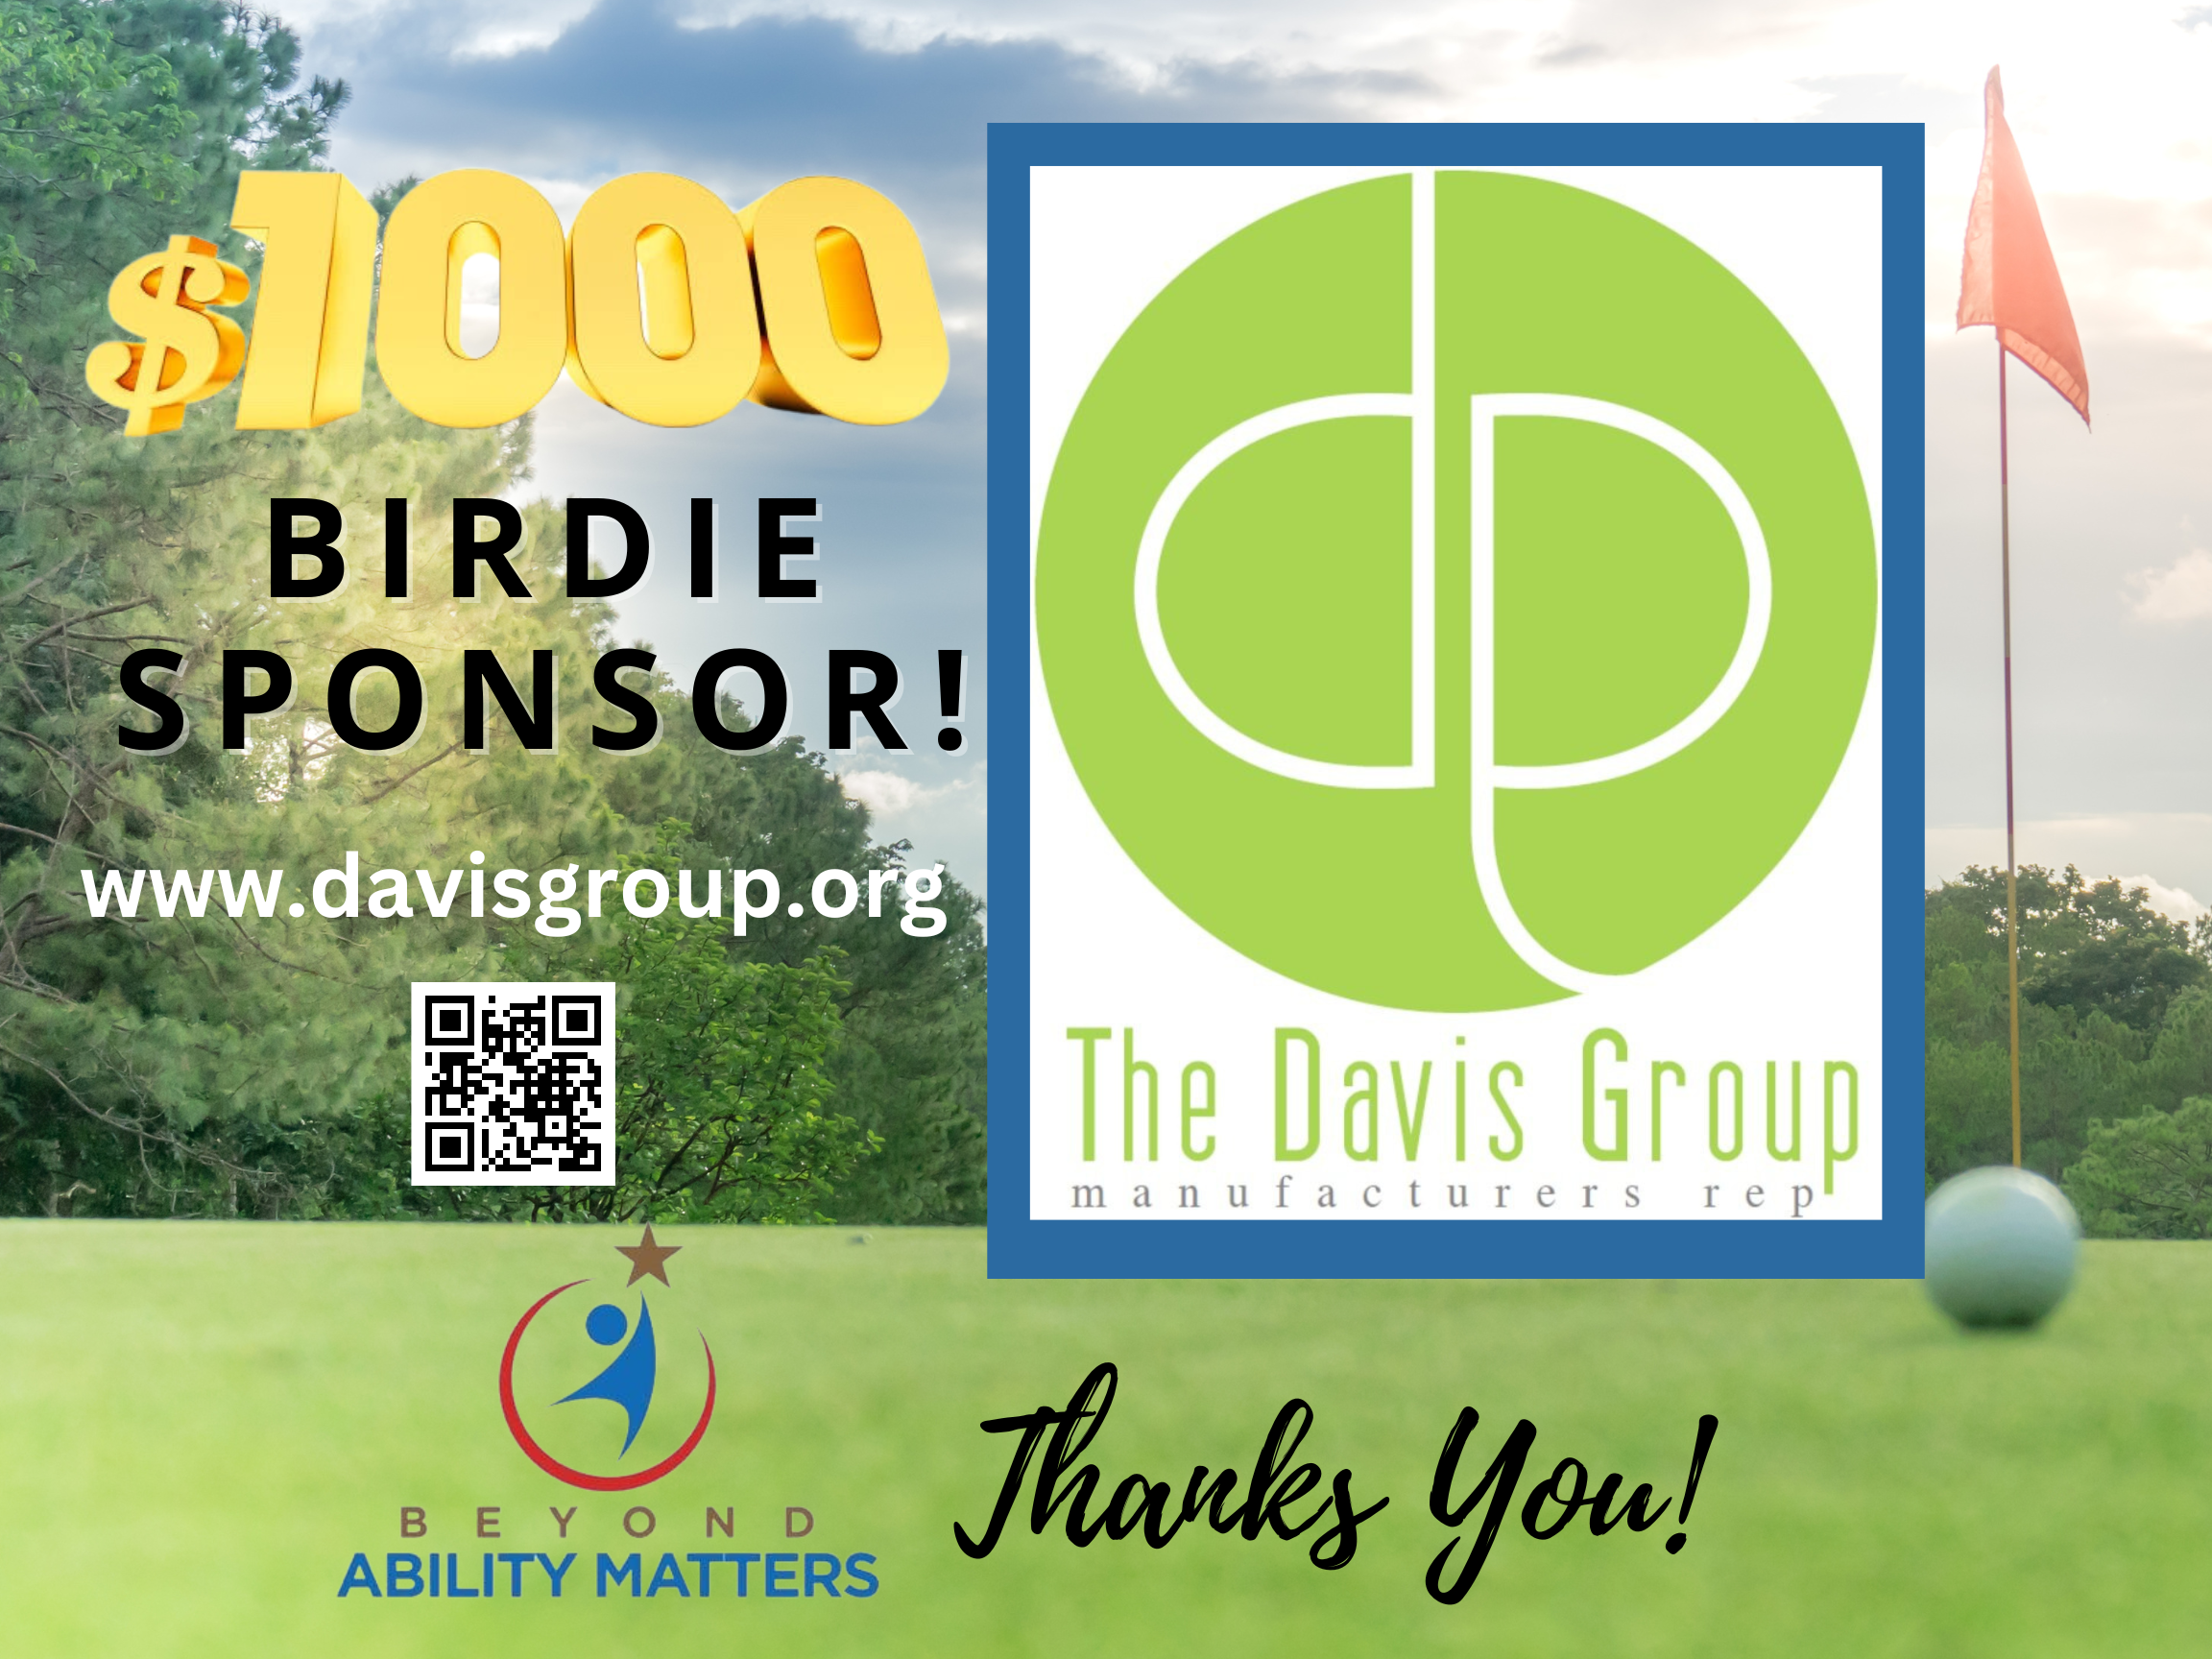 david group - birdie